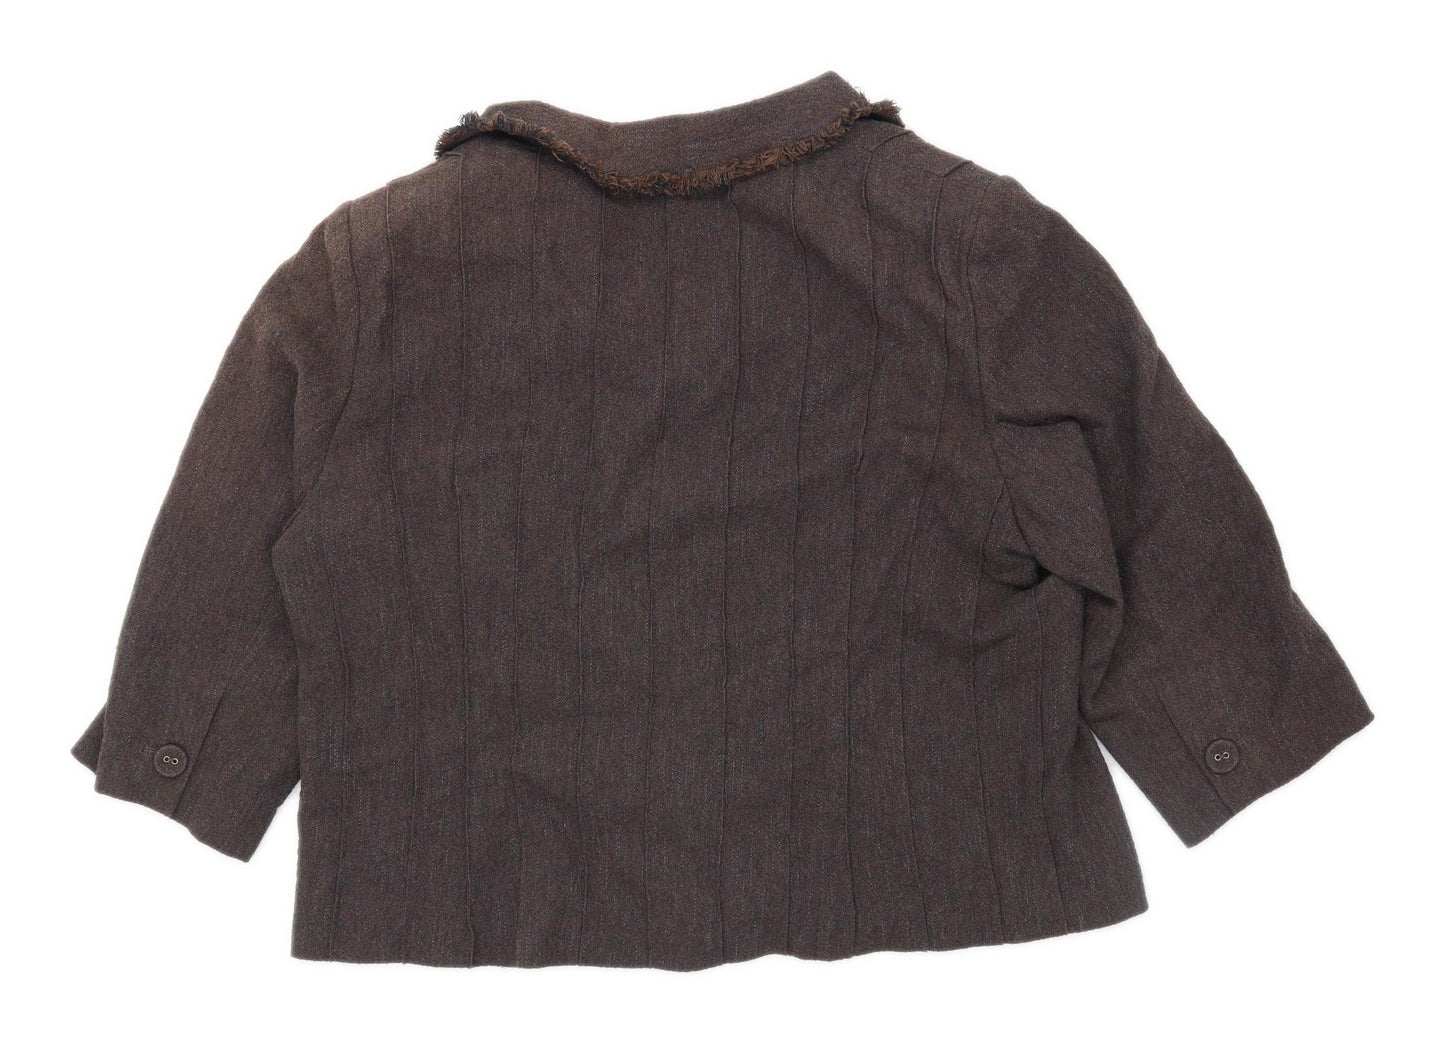 Windsmoor Womens Size 20 Cotton Blend Brown Jacket